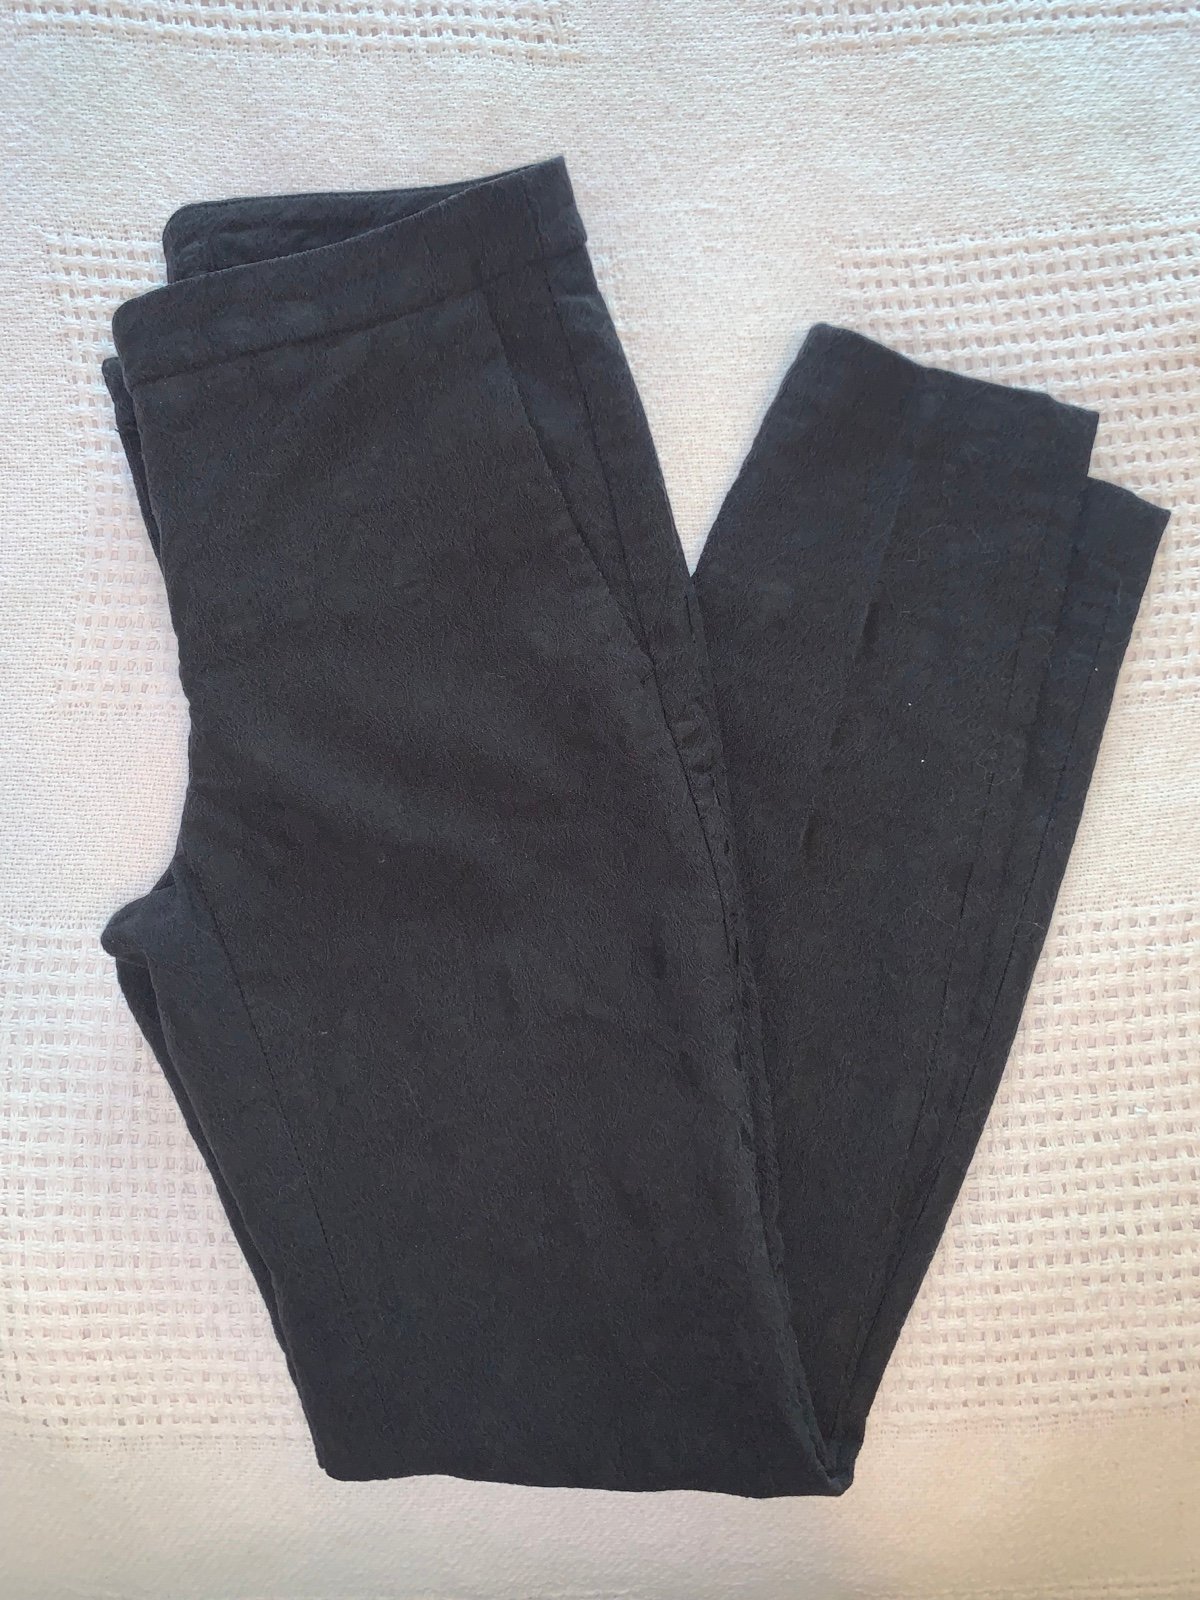 Fashion Kenar black textured dress pants trousers size 0 pLc8H842v no tax